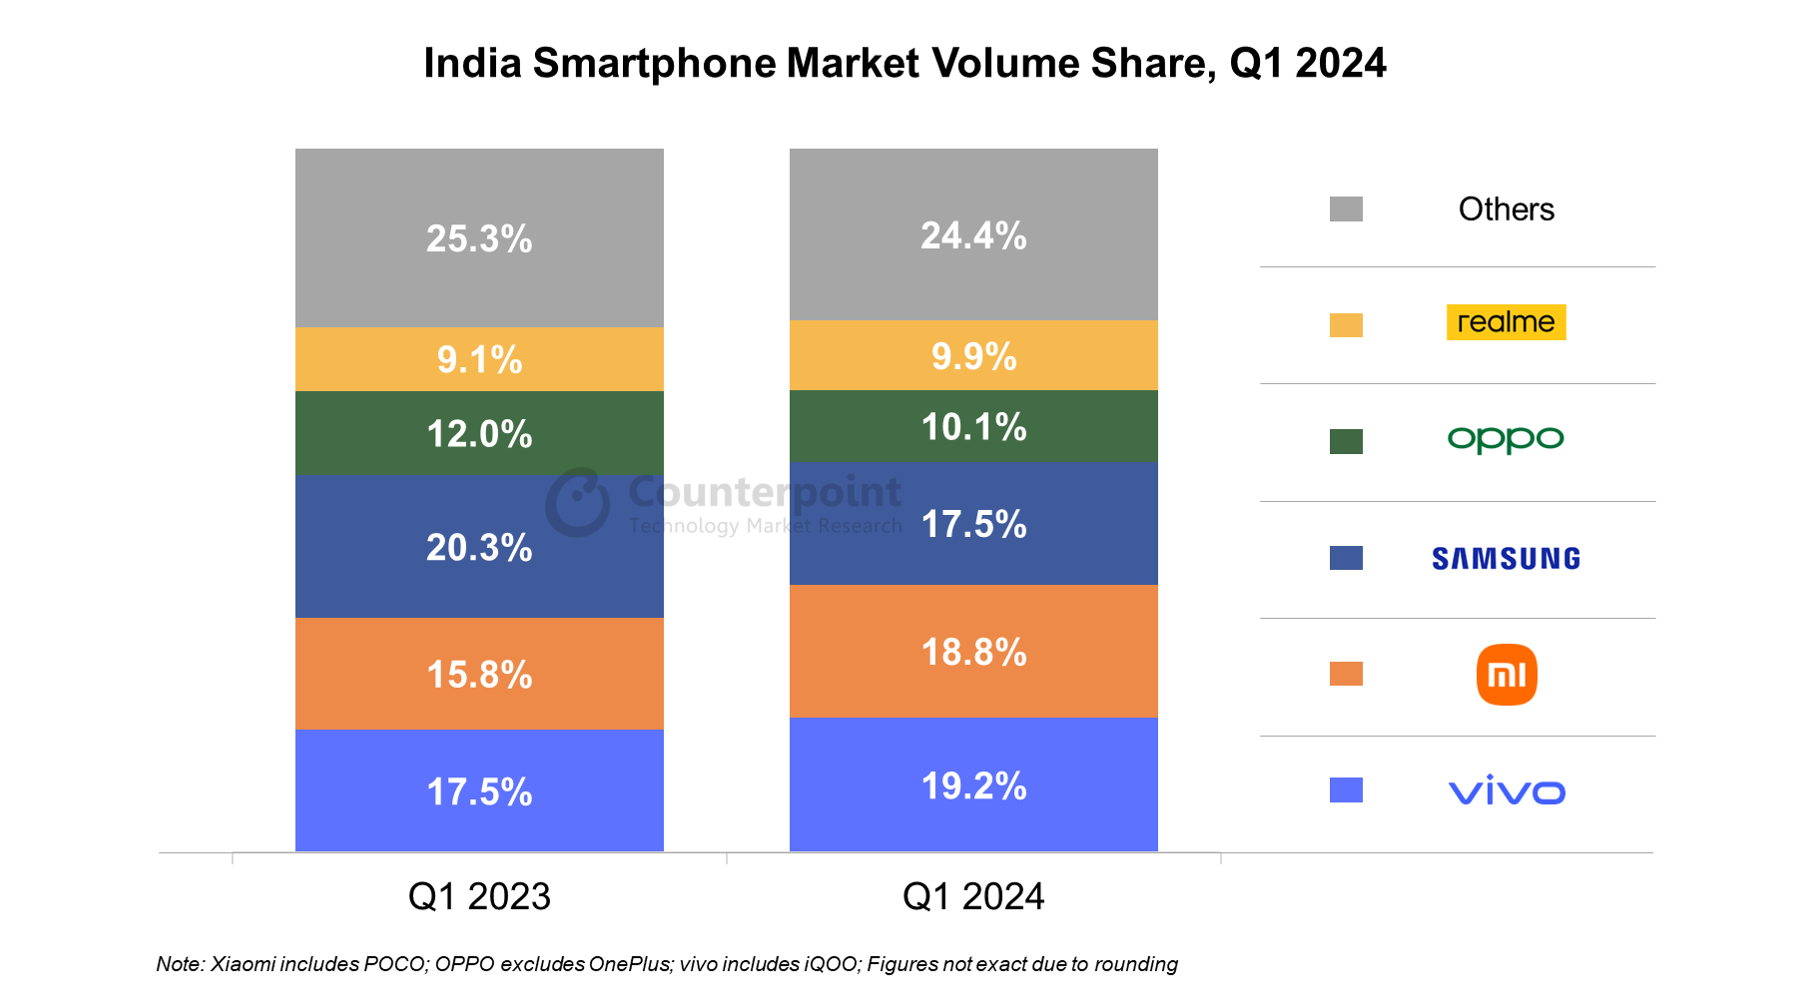 Premium Smartphones Gain More Popularity in India for Q1 2024: Counterpoint